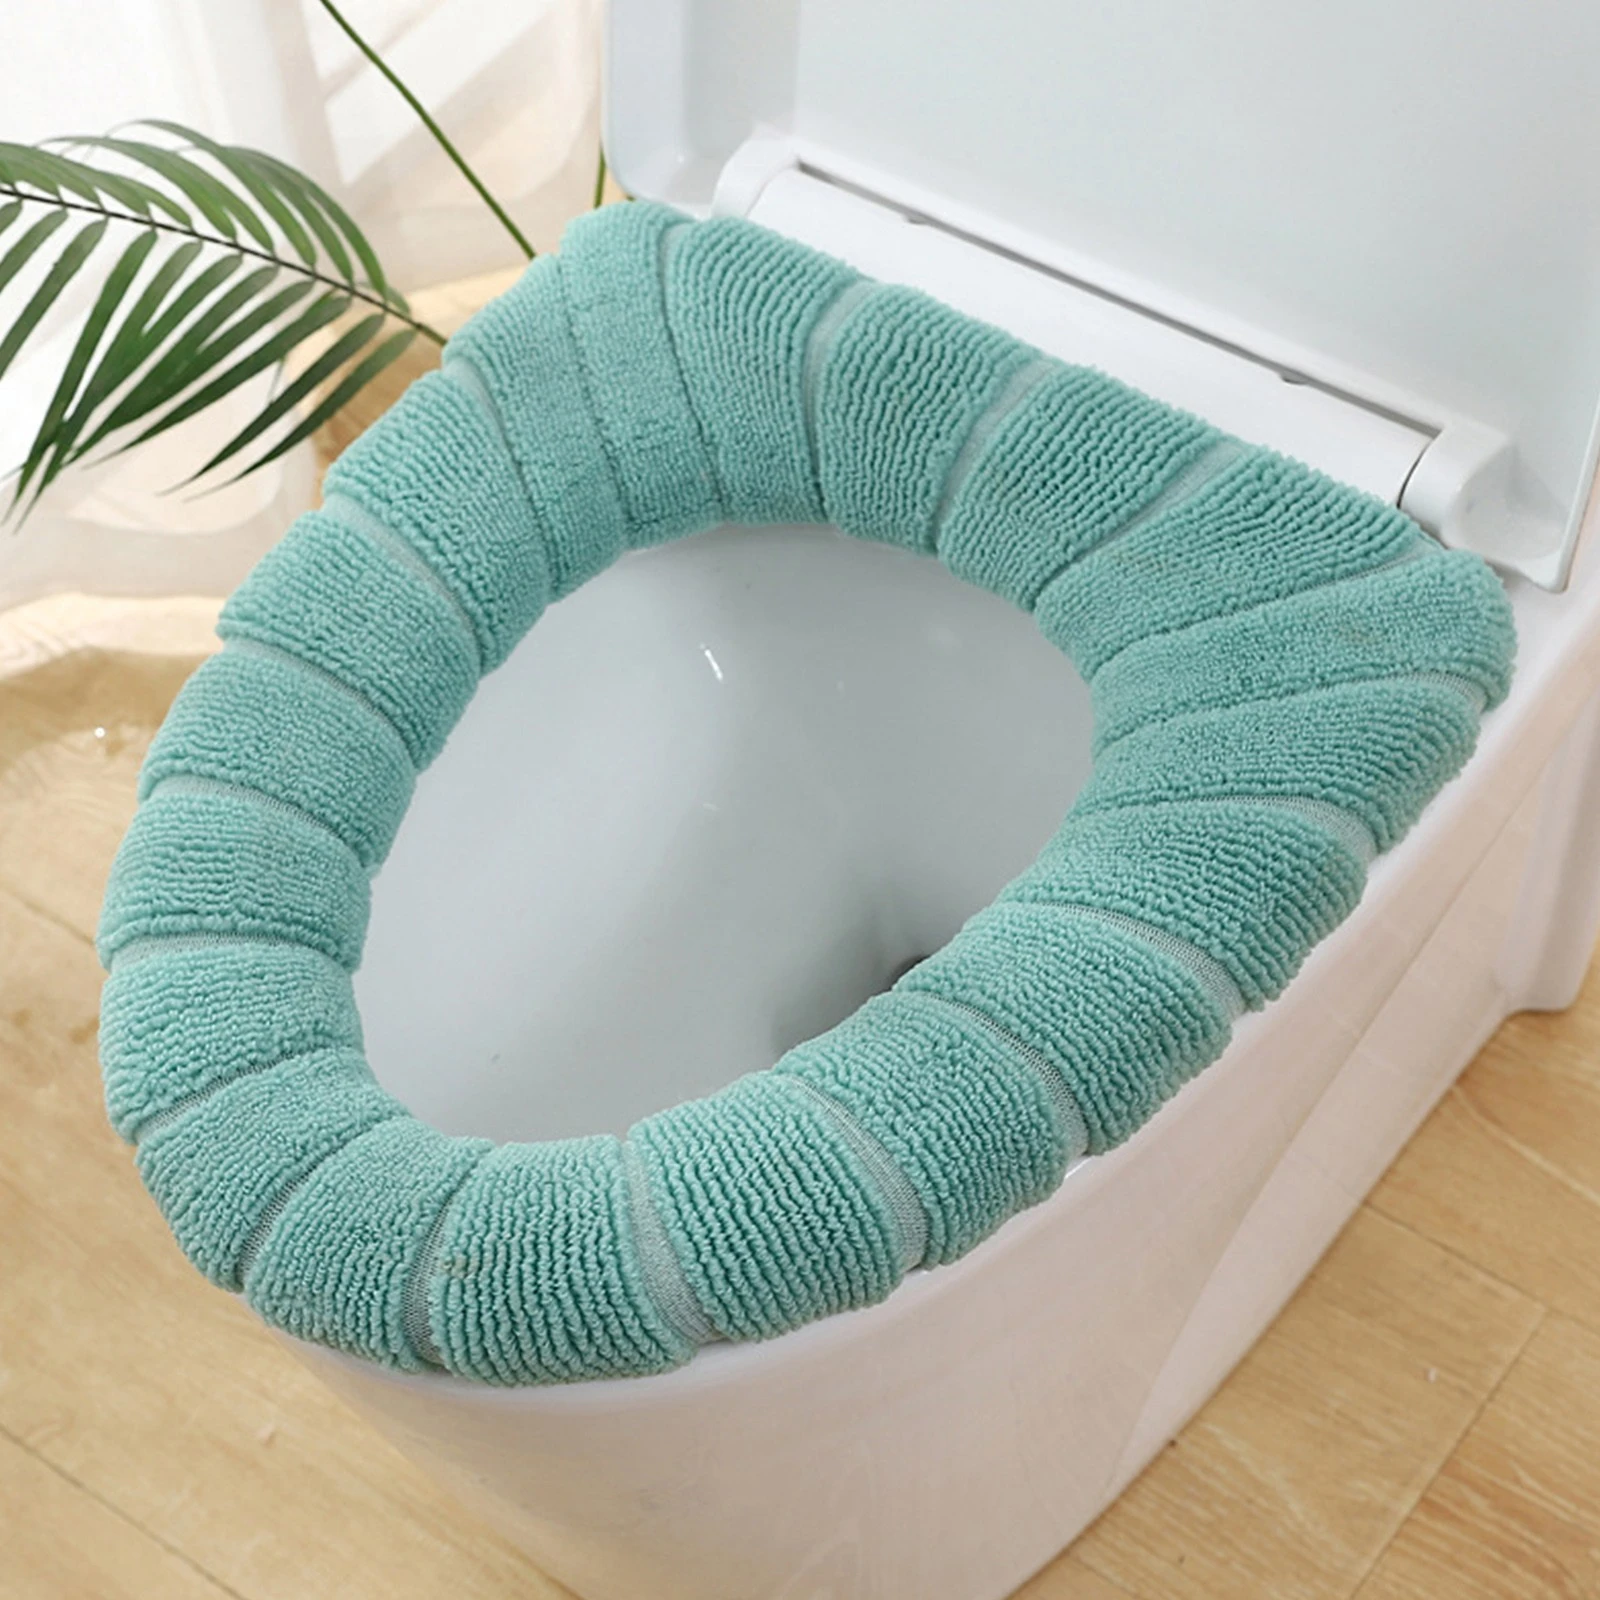 Soft Bathroom Toilet Seat Closestool Washable Warmer Mat Cover Pad Cushion USA